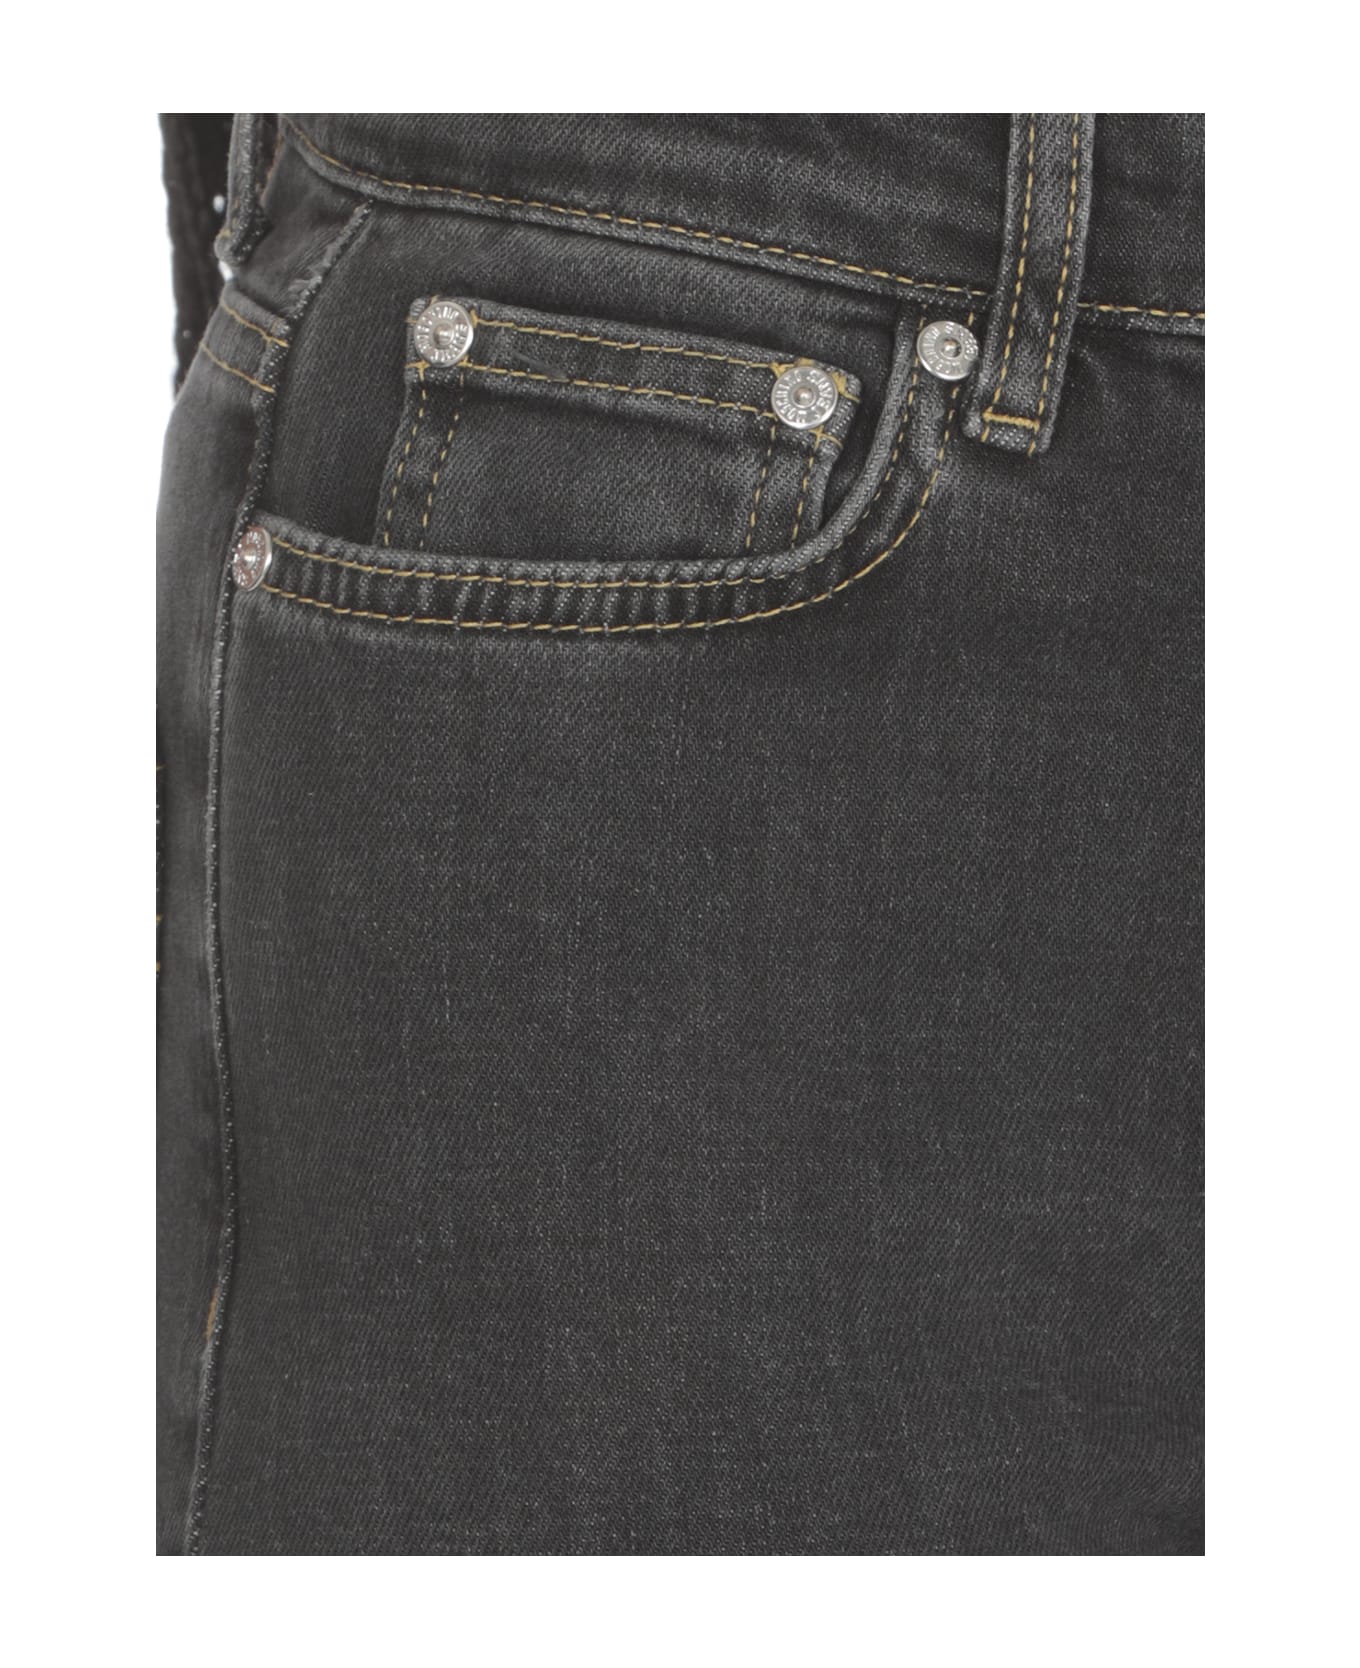 M05CH1N0 Jeans Cotton Jeans - Black デニム